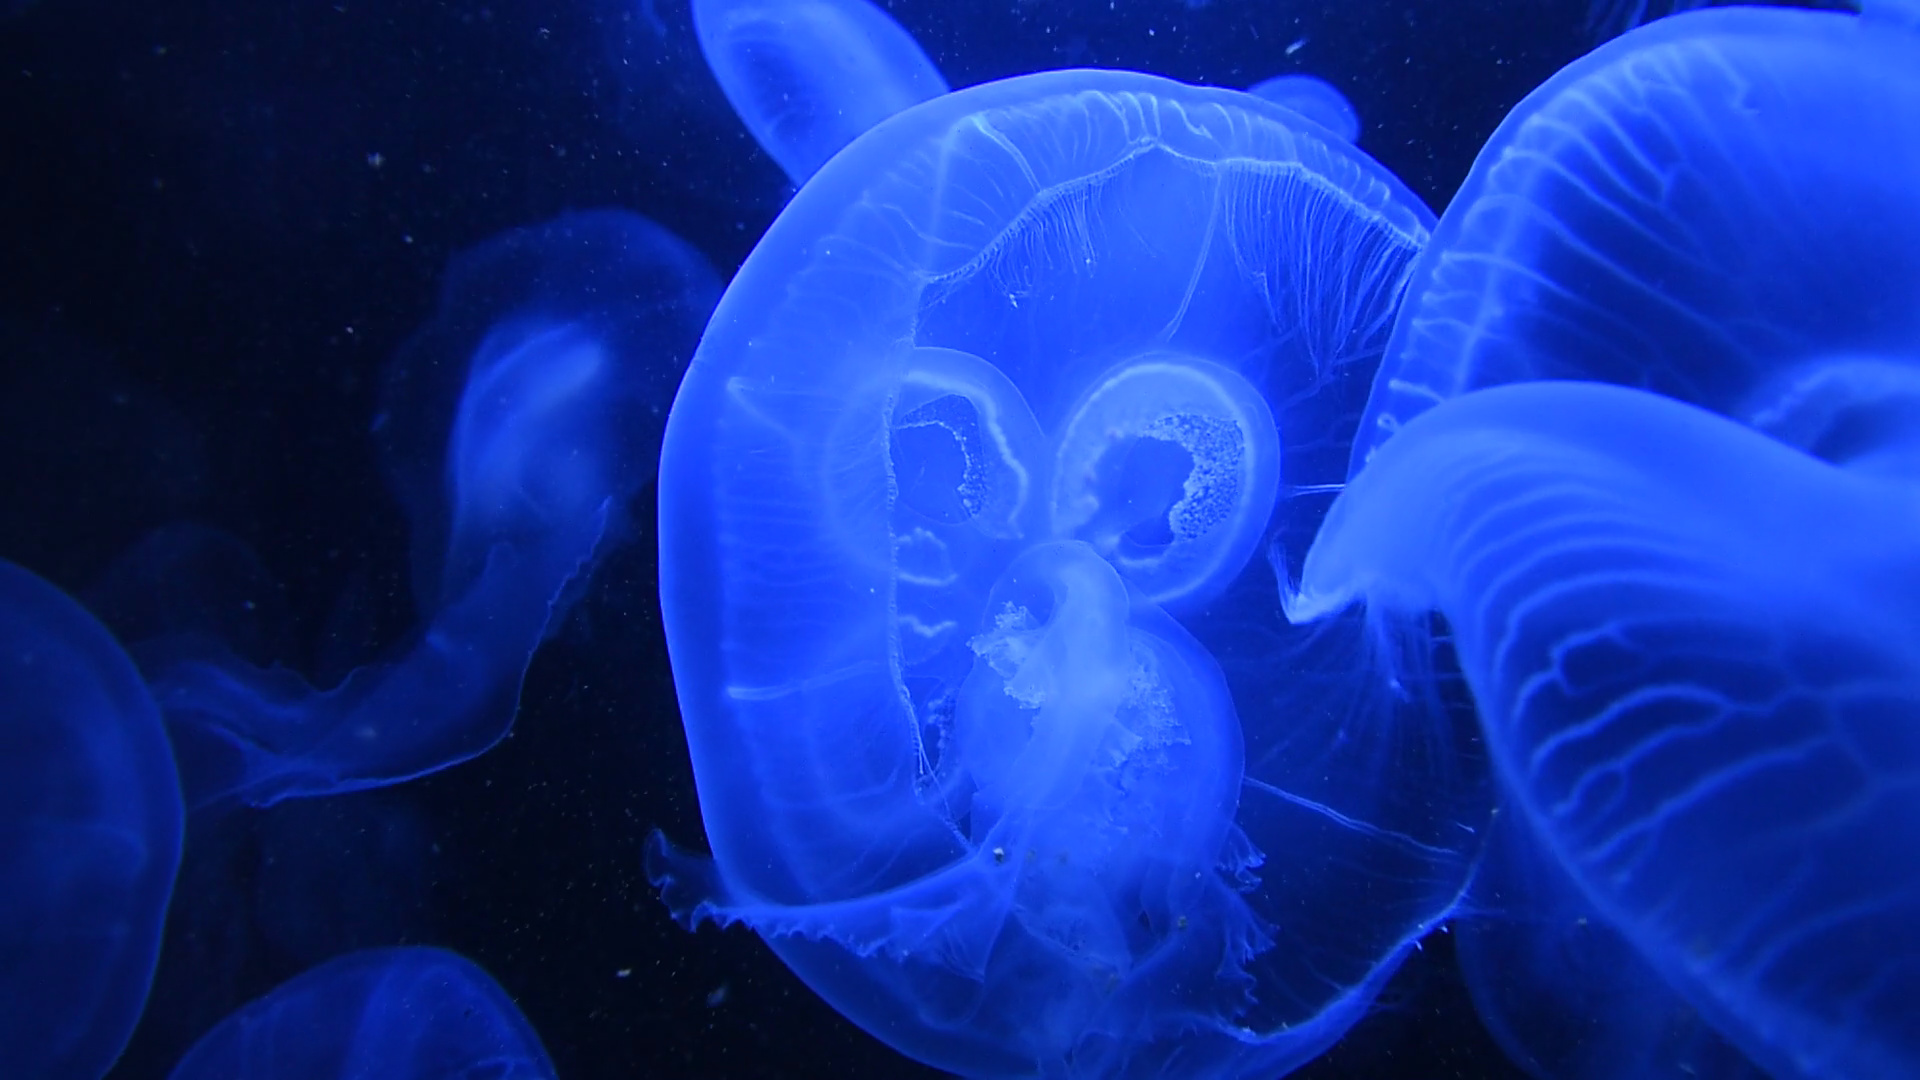 Group of jellyfish, Harmonious marine life, Peaceful ocean creatures, Beautiful aquatic scene, 1920x1080 Full HD Desktop